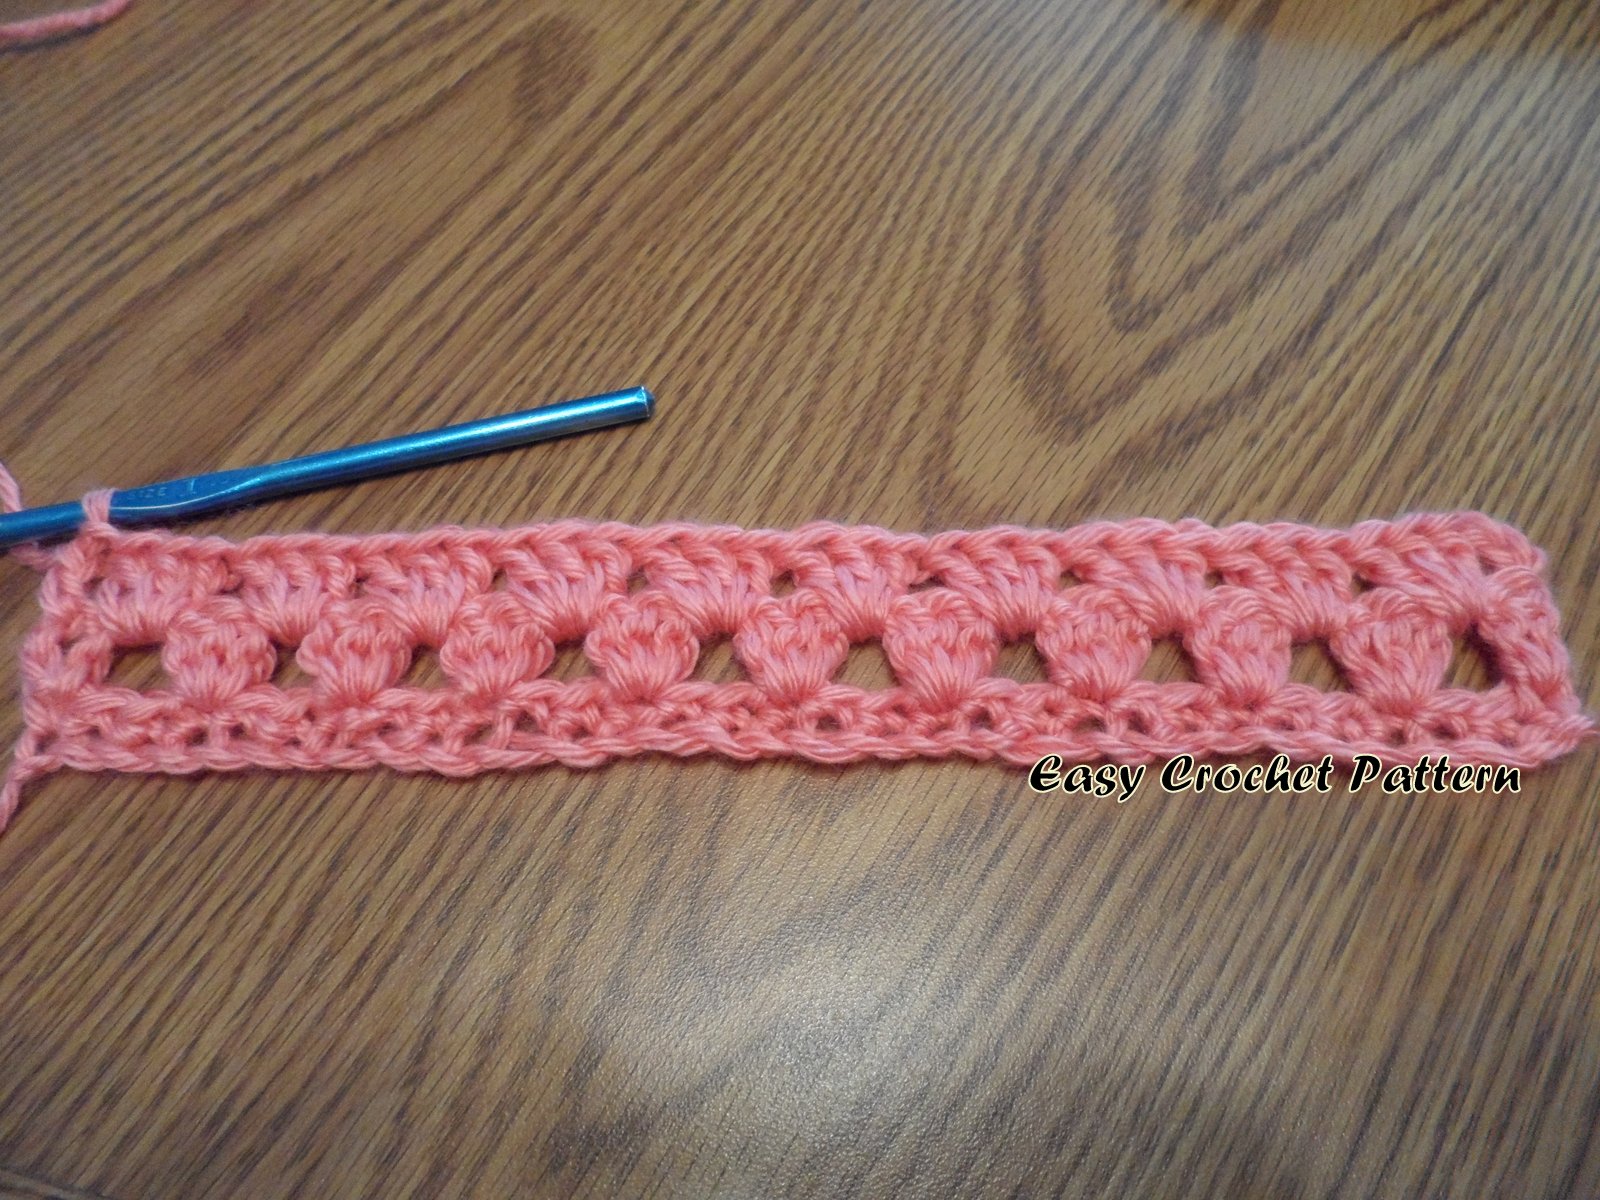 Easy Crochet Pattern: Crochet Granny Stripe Afghan Tutorial Rewrite